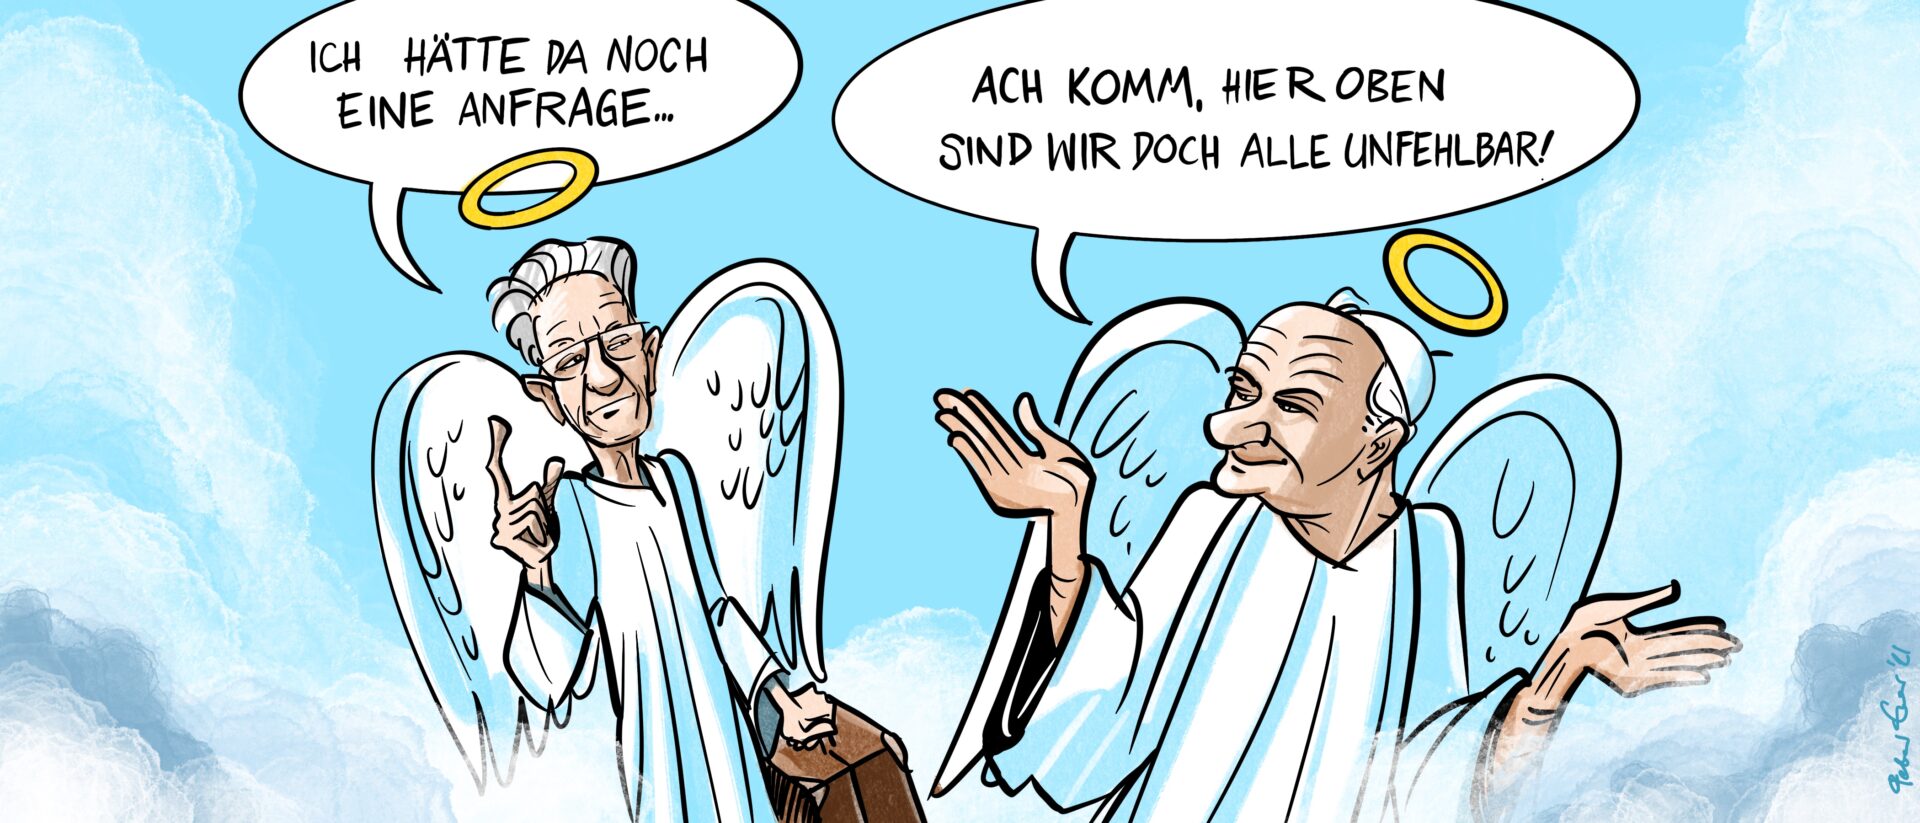 Hans Küng trifft Johannes Paul II. im Himmel.